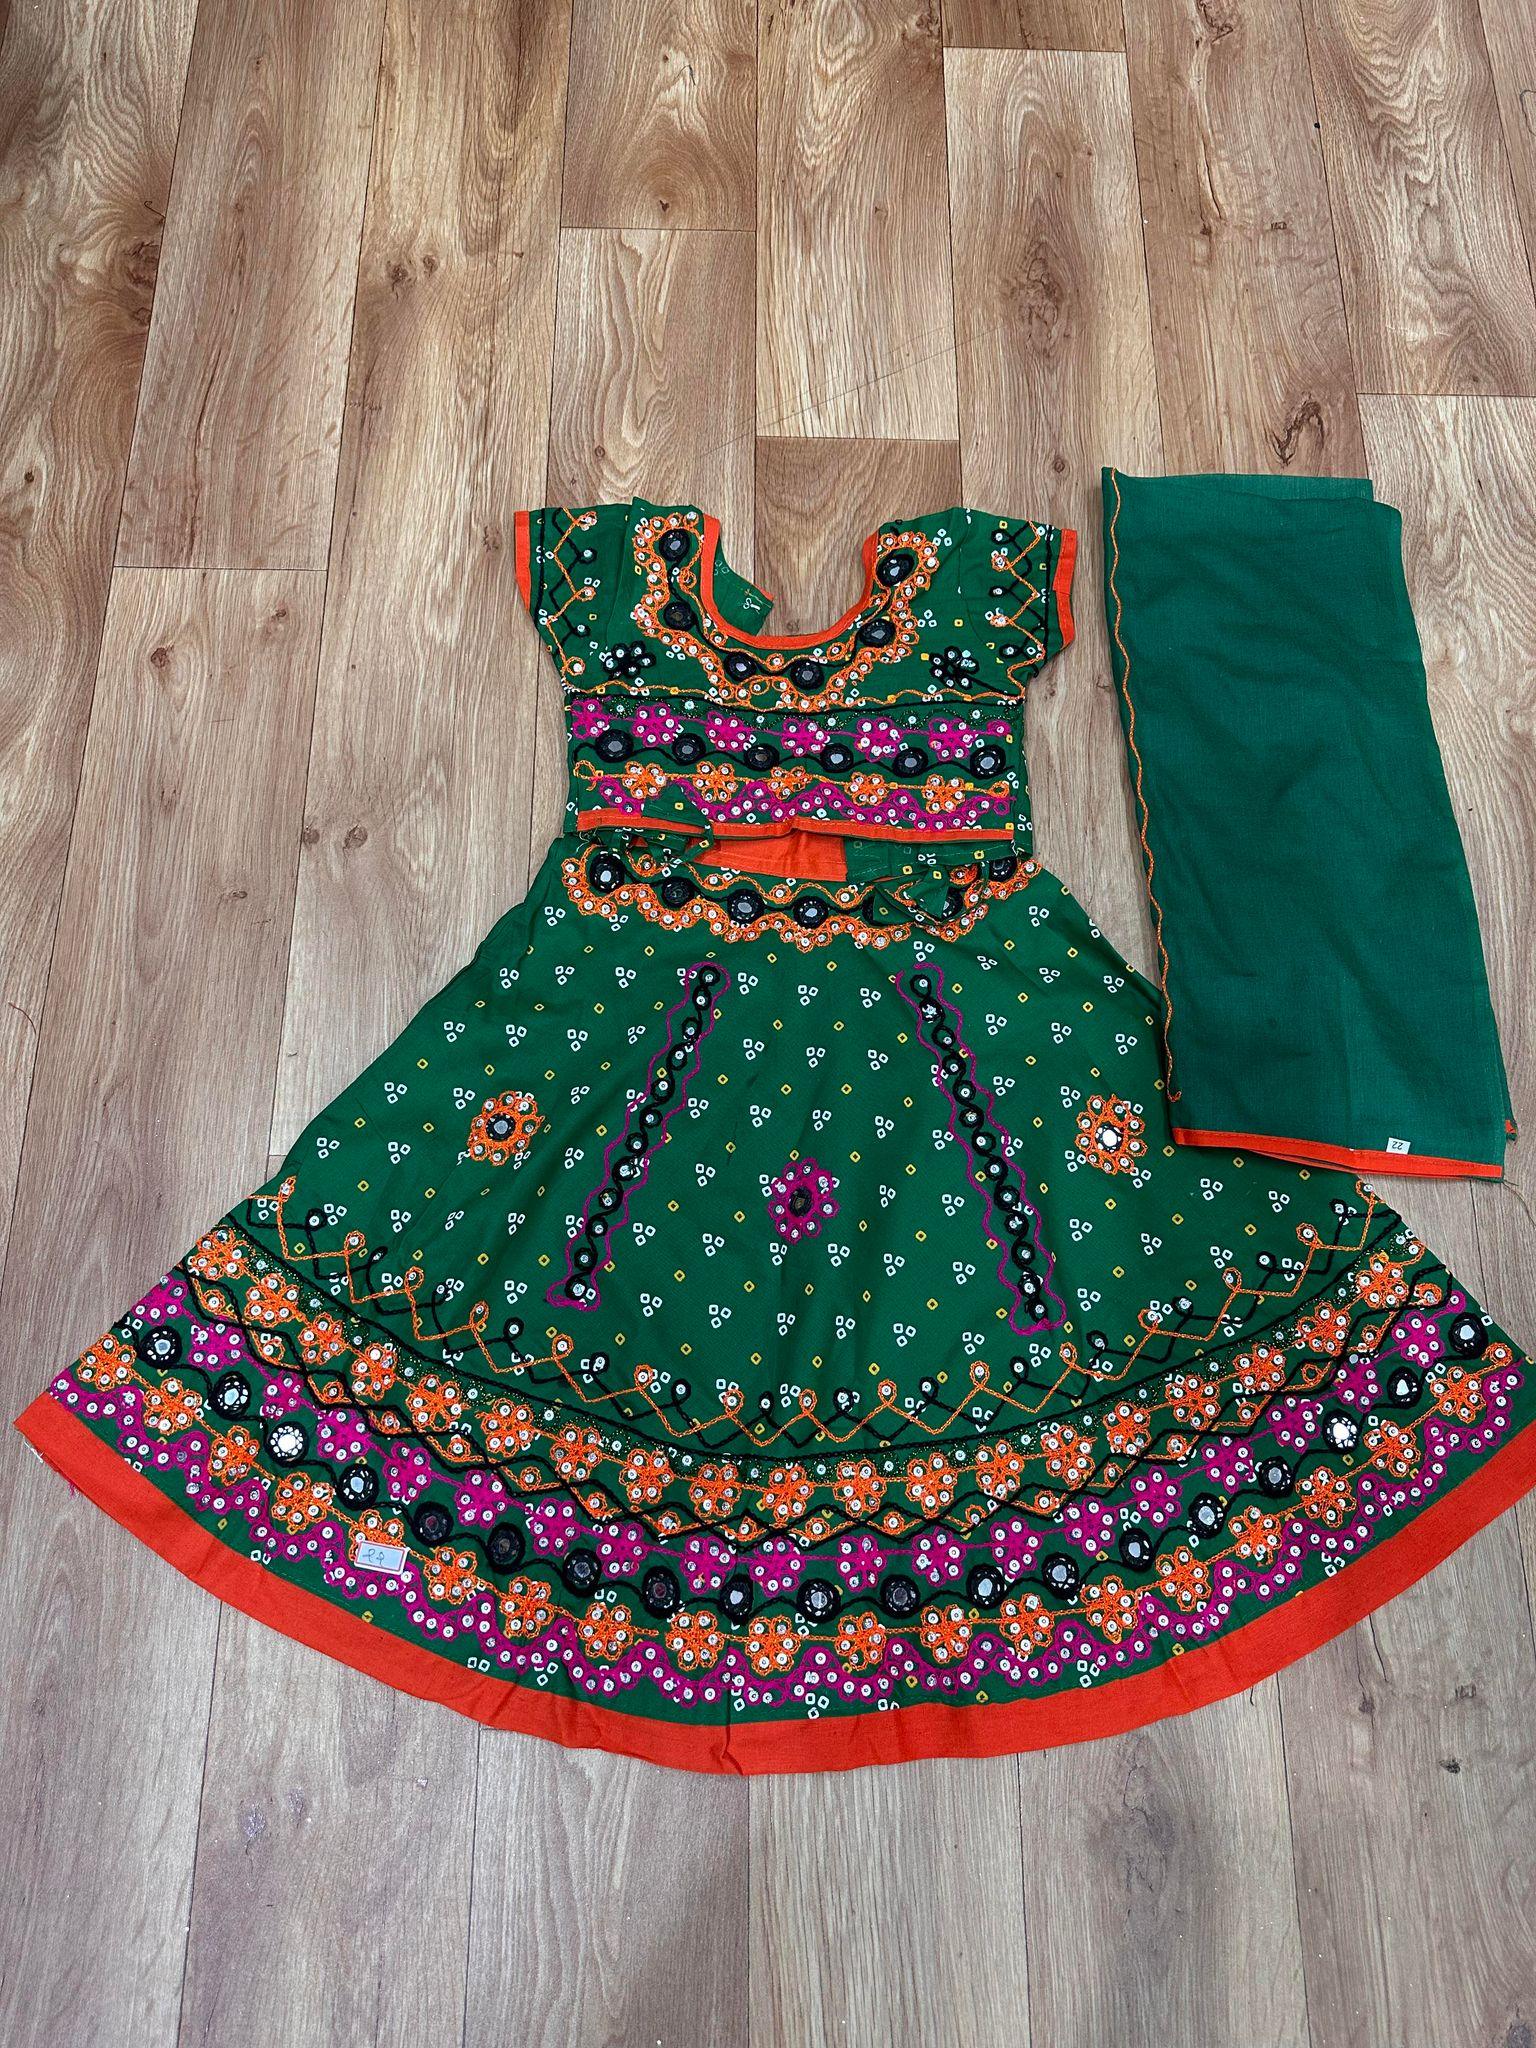 Buy CHICK N ZERO Radha dress/lehenga choli for baby girl/new born ethnic  wear (Green top maroon skirt) at Amazon.in